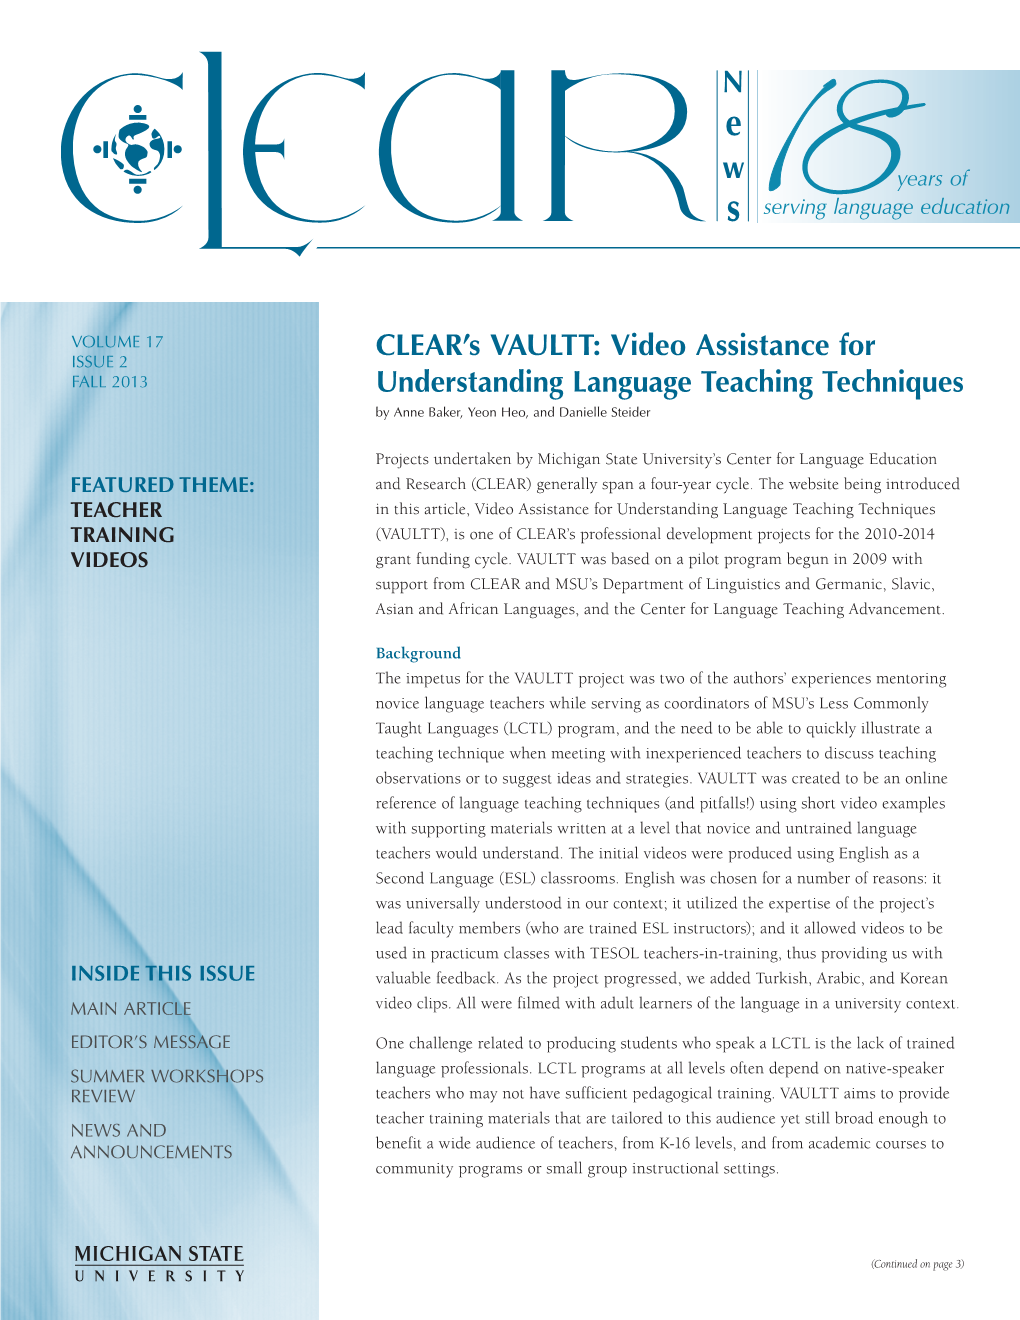 Clear's Vaultt: Video Assistance for Understanding Language Teaching